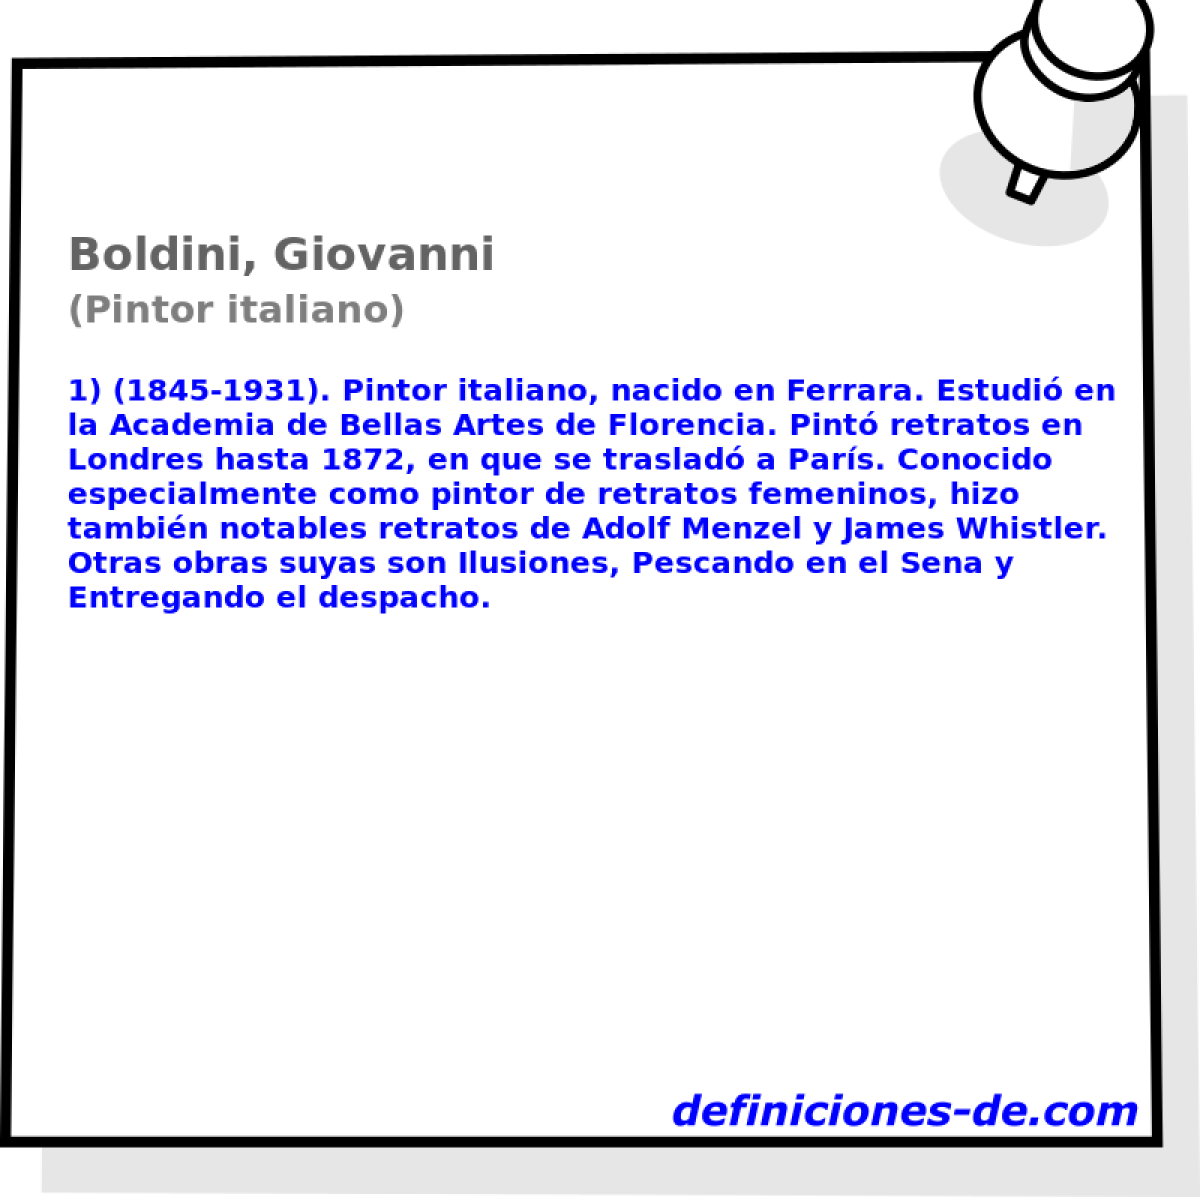 Boldini, Giovanni (Pintor italiano)